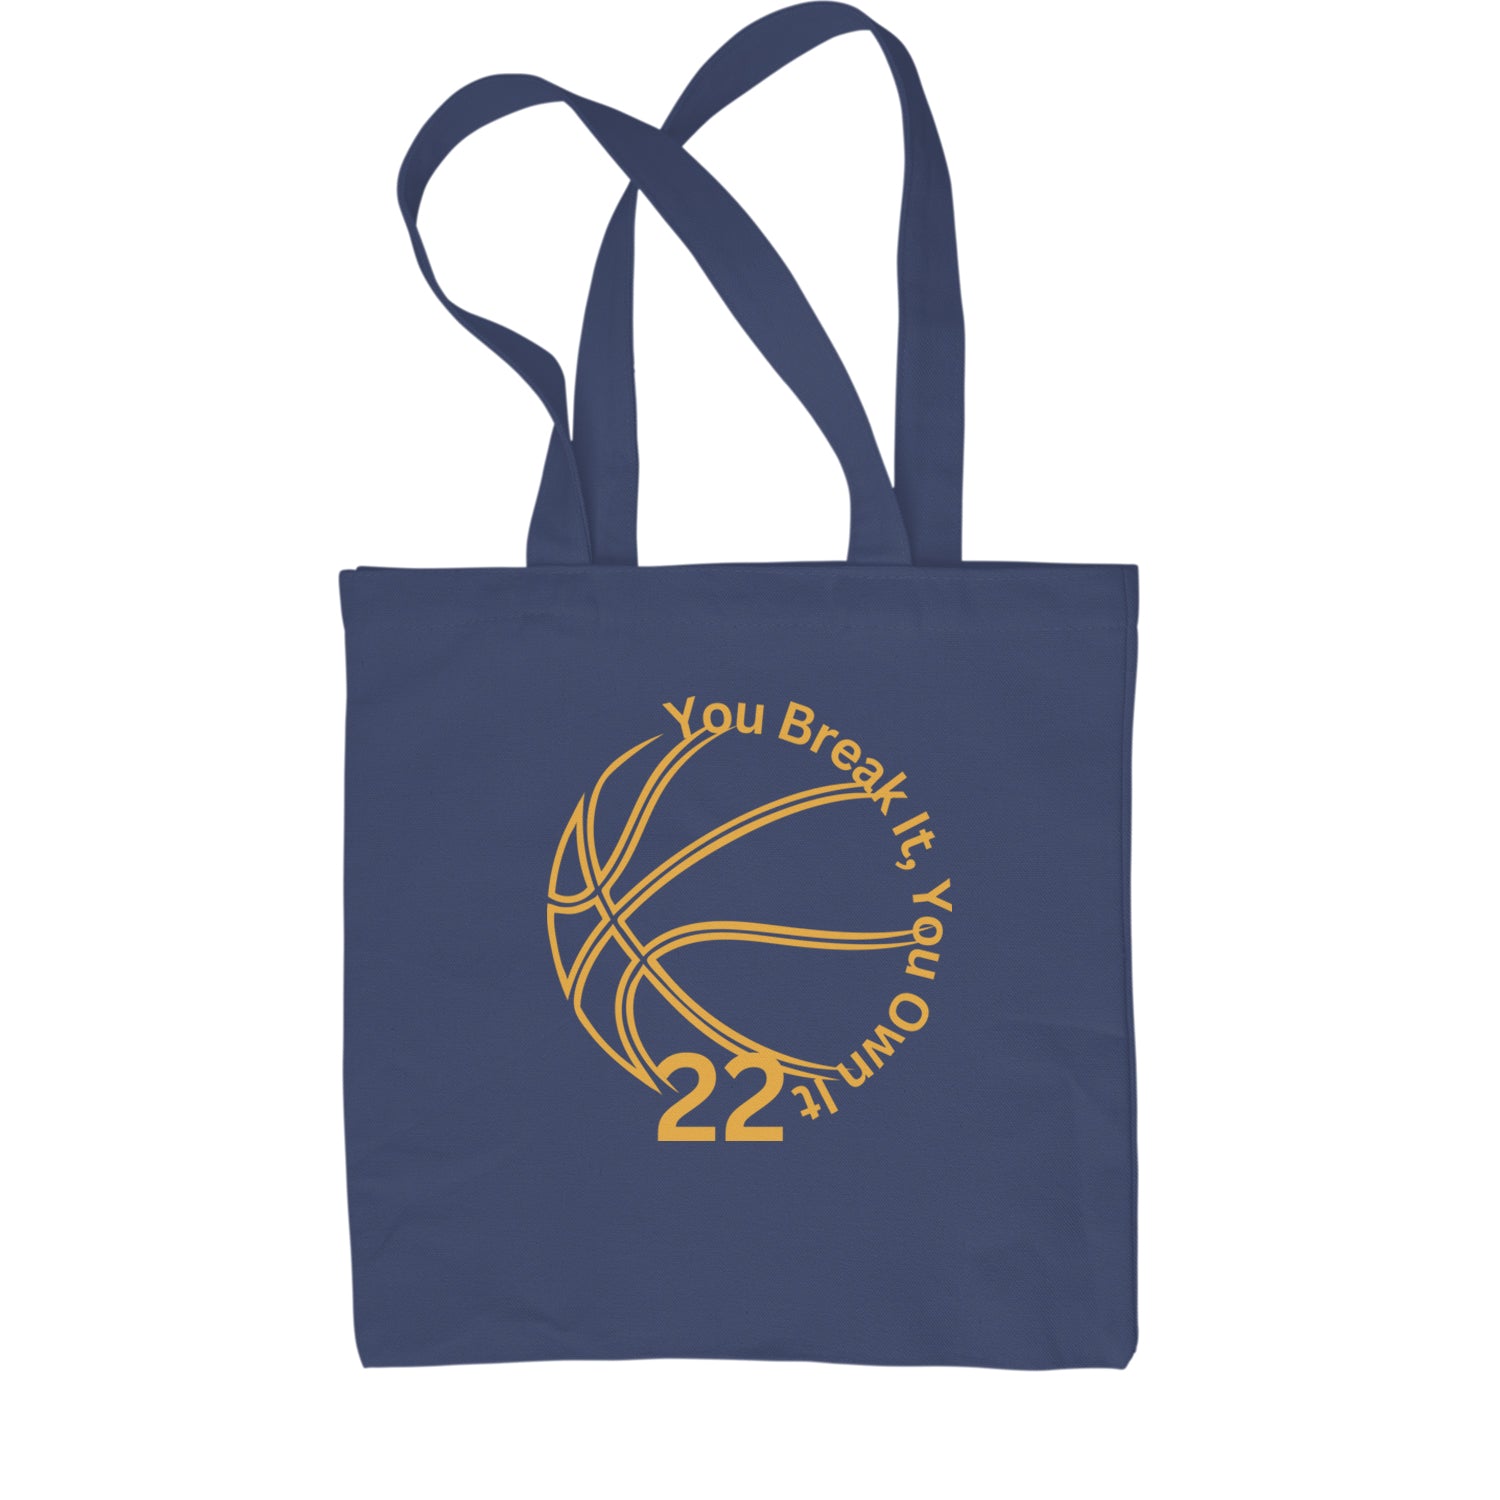 You Break It You Own It 22 Basketball Shopping Tote Bag